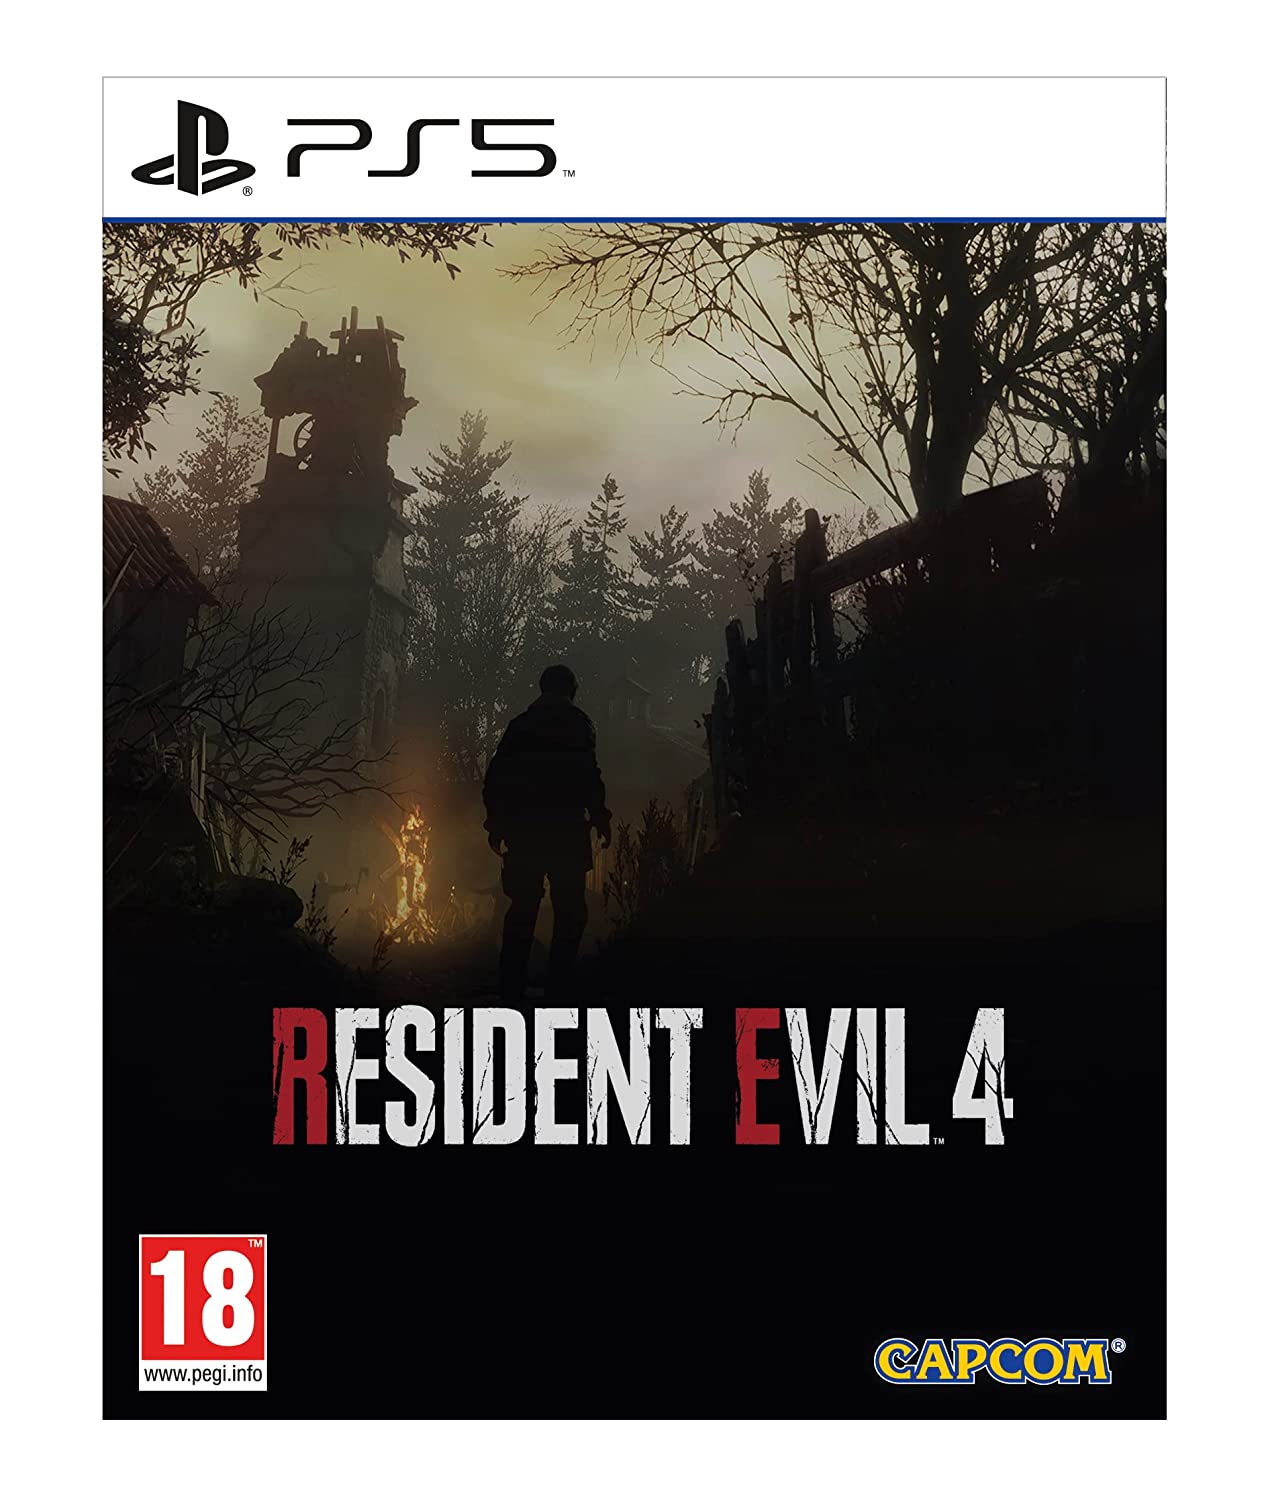 Resident Evil 4 Remake PS4 Vs PS5 Direct Comparison - Graphics